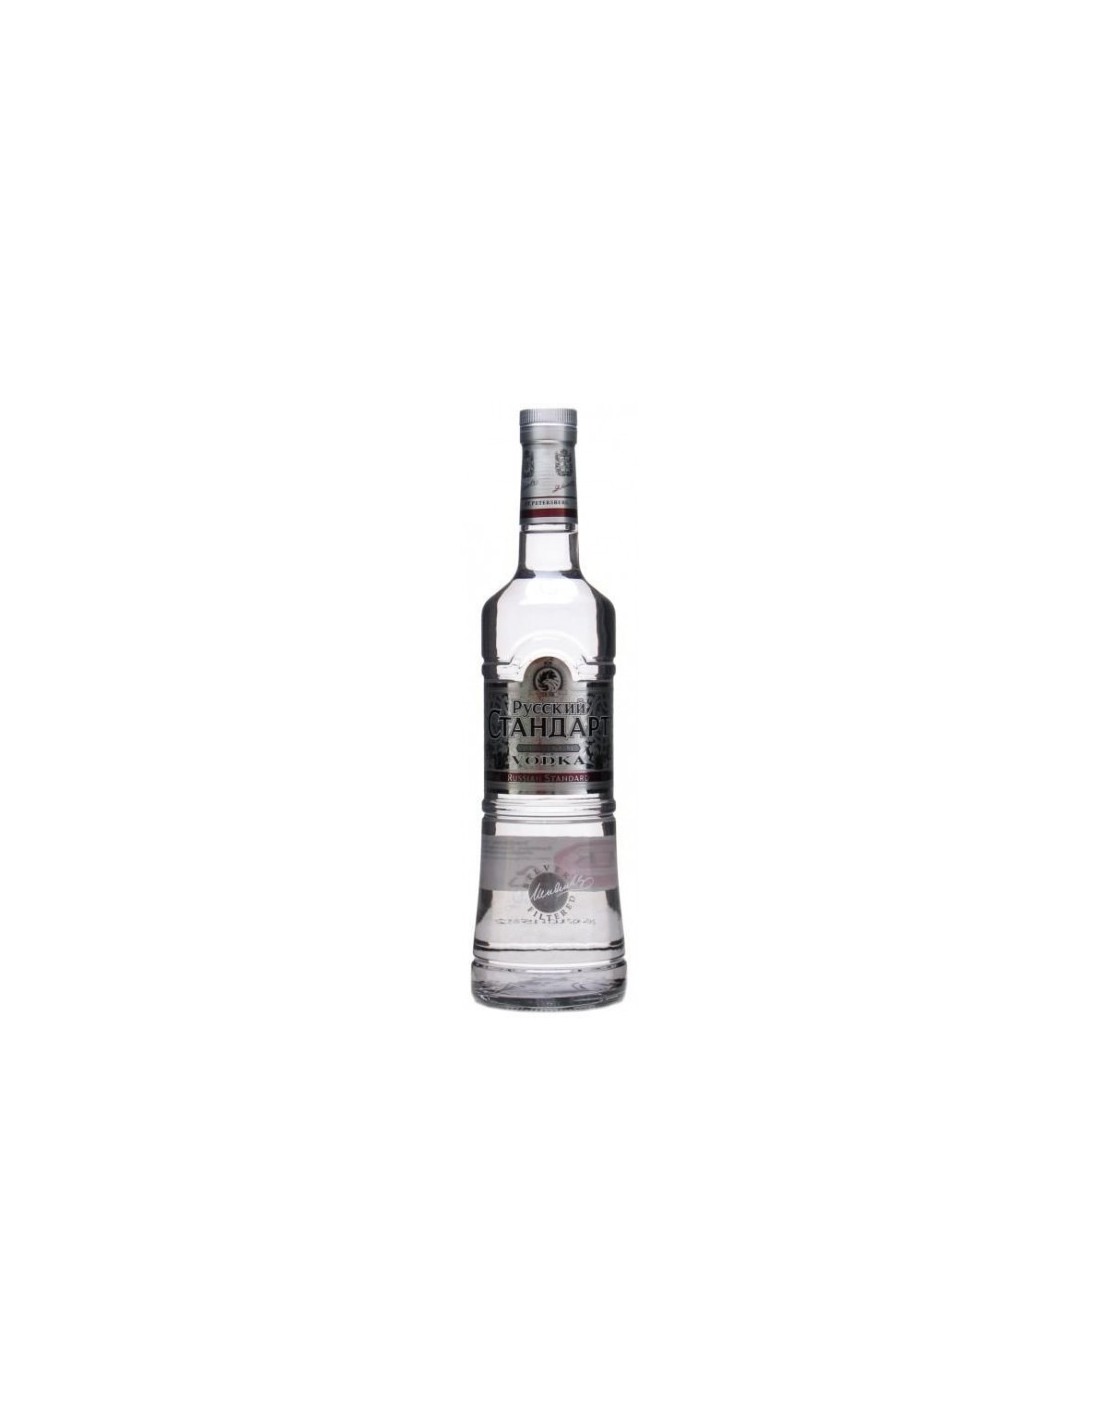 Vodca Russian Standard Platinum 0.7L, 40% alc., Rusia alcooldiscount.ro